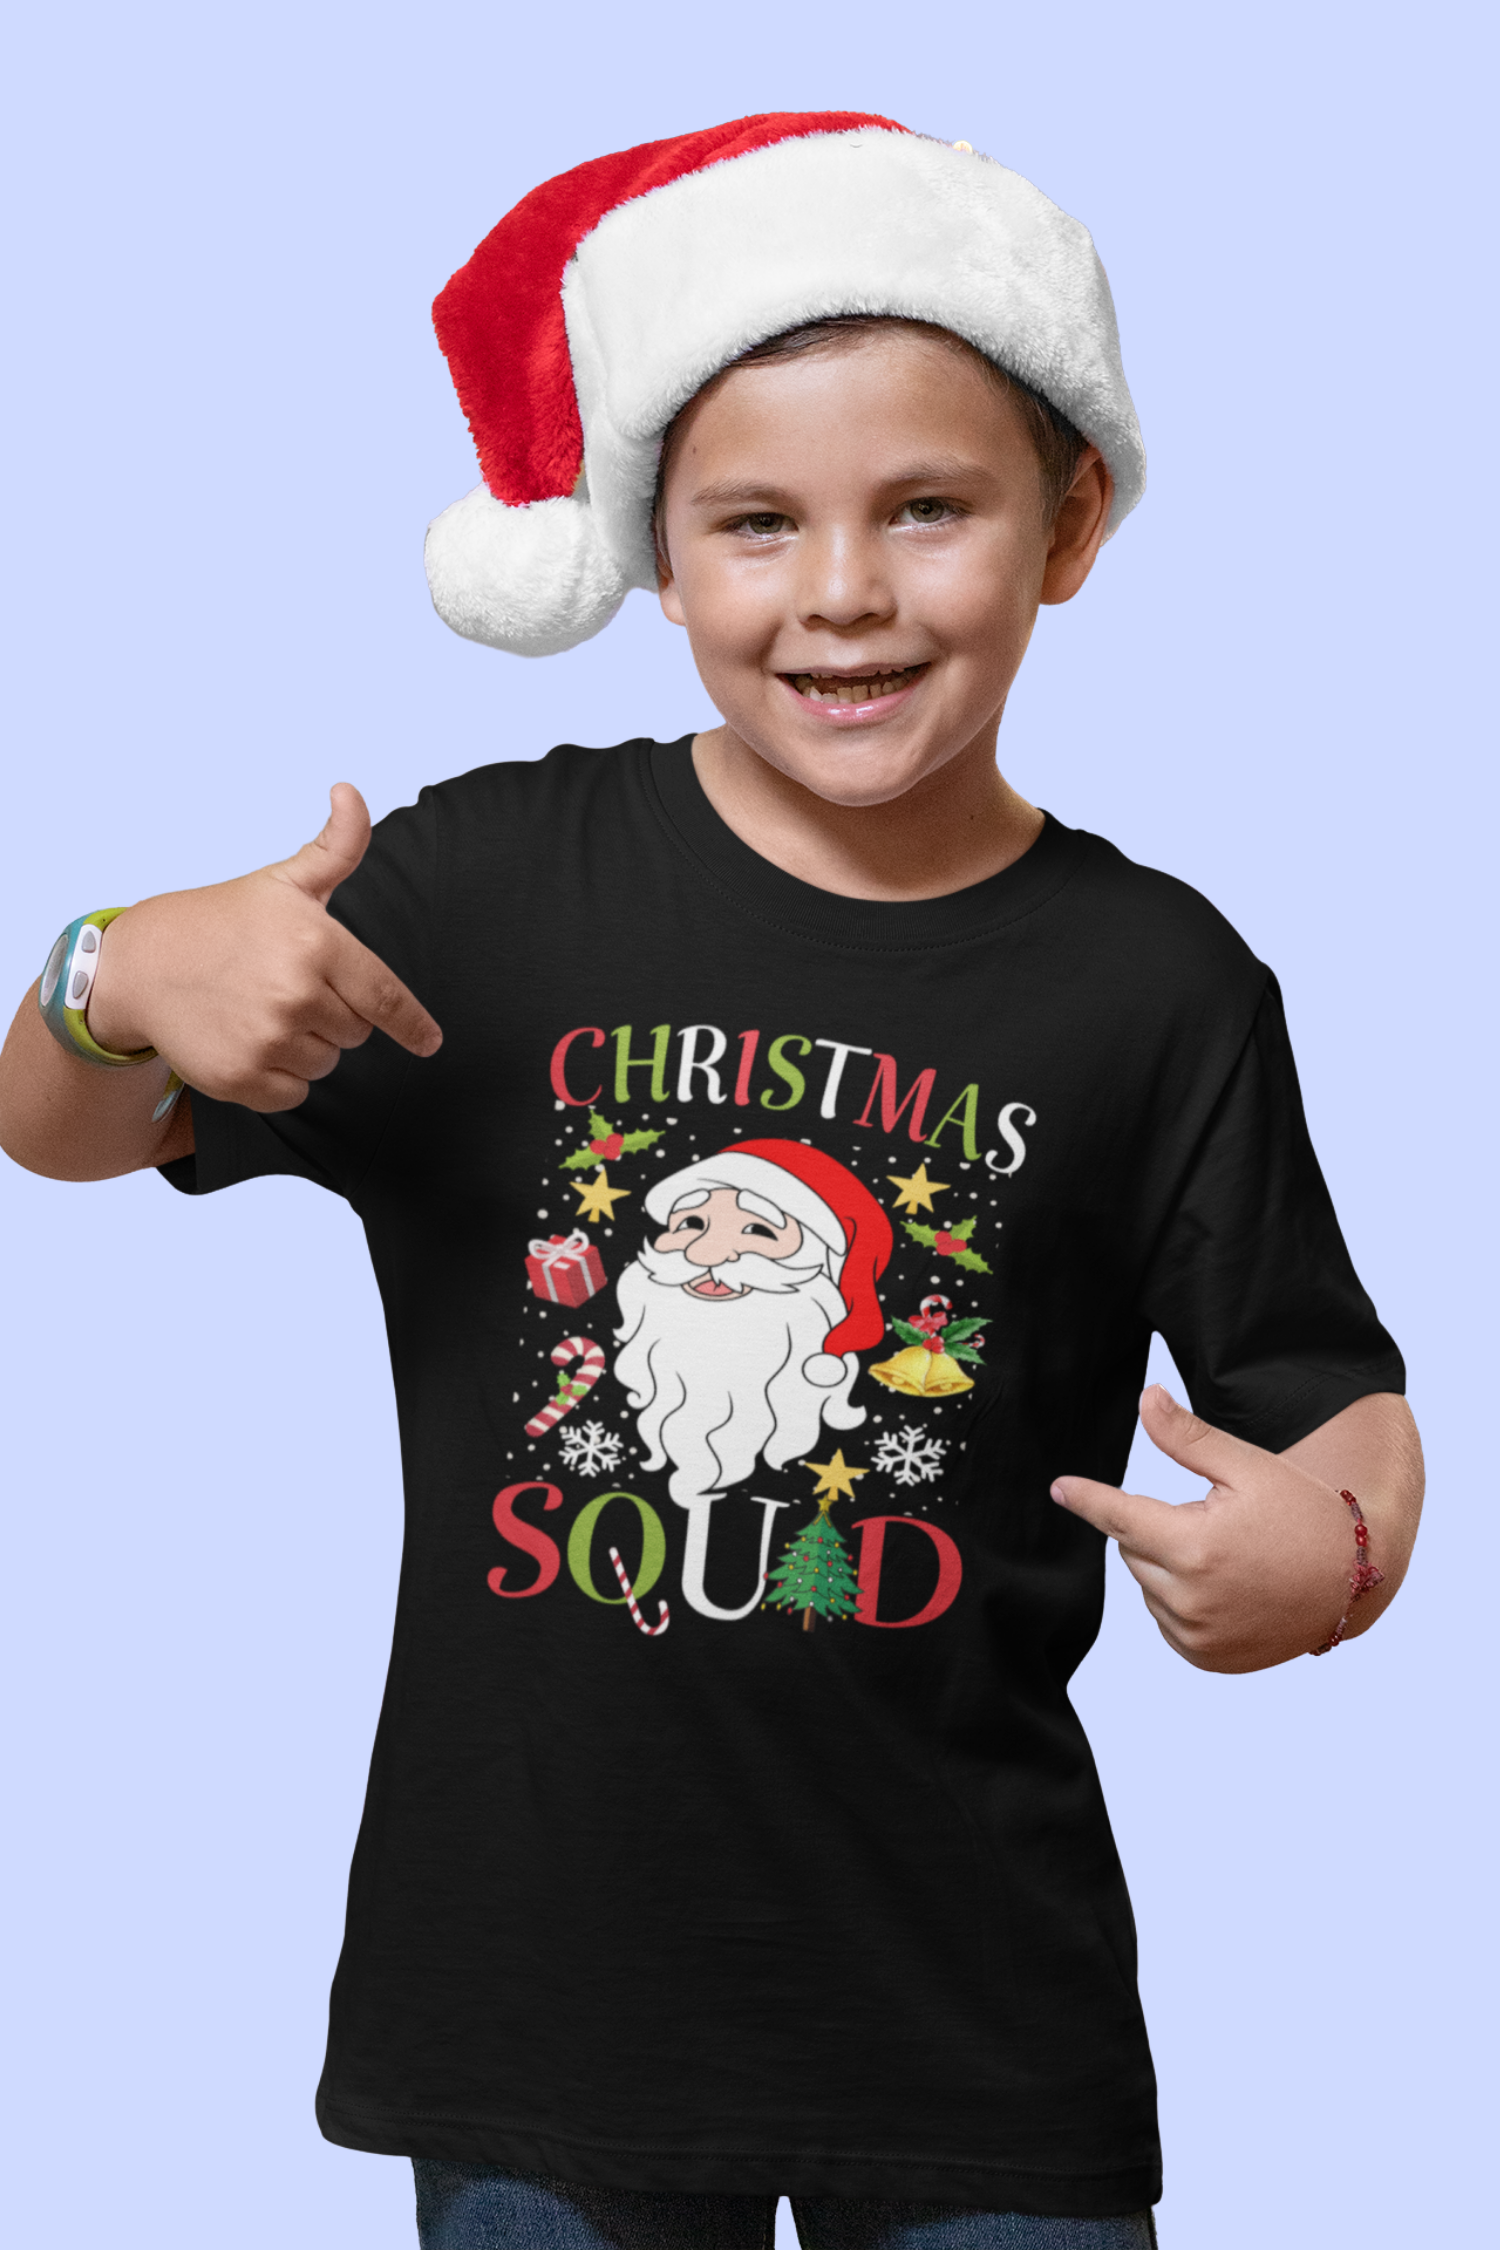 Christmas Squad Family T-Shirt - nautunkee